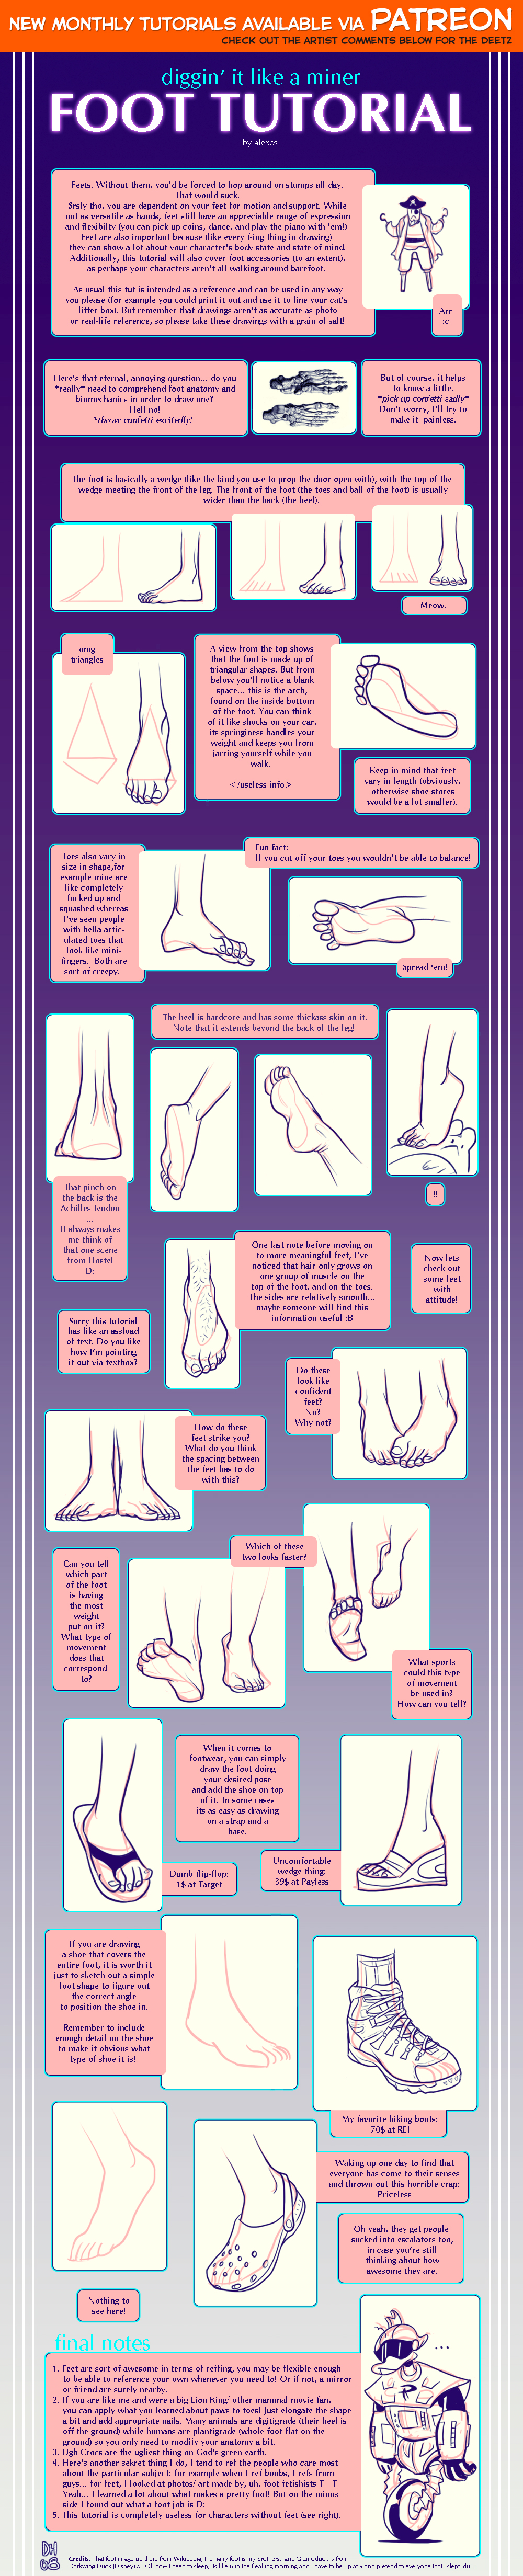 Foot tutorial